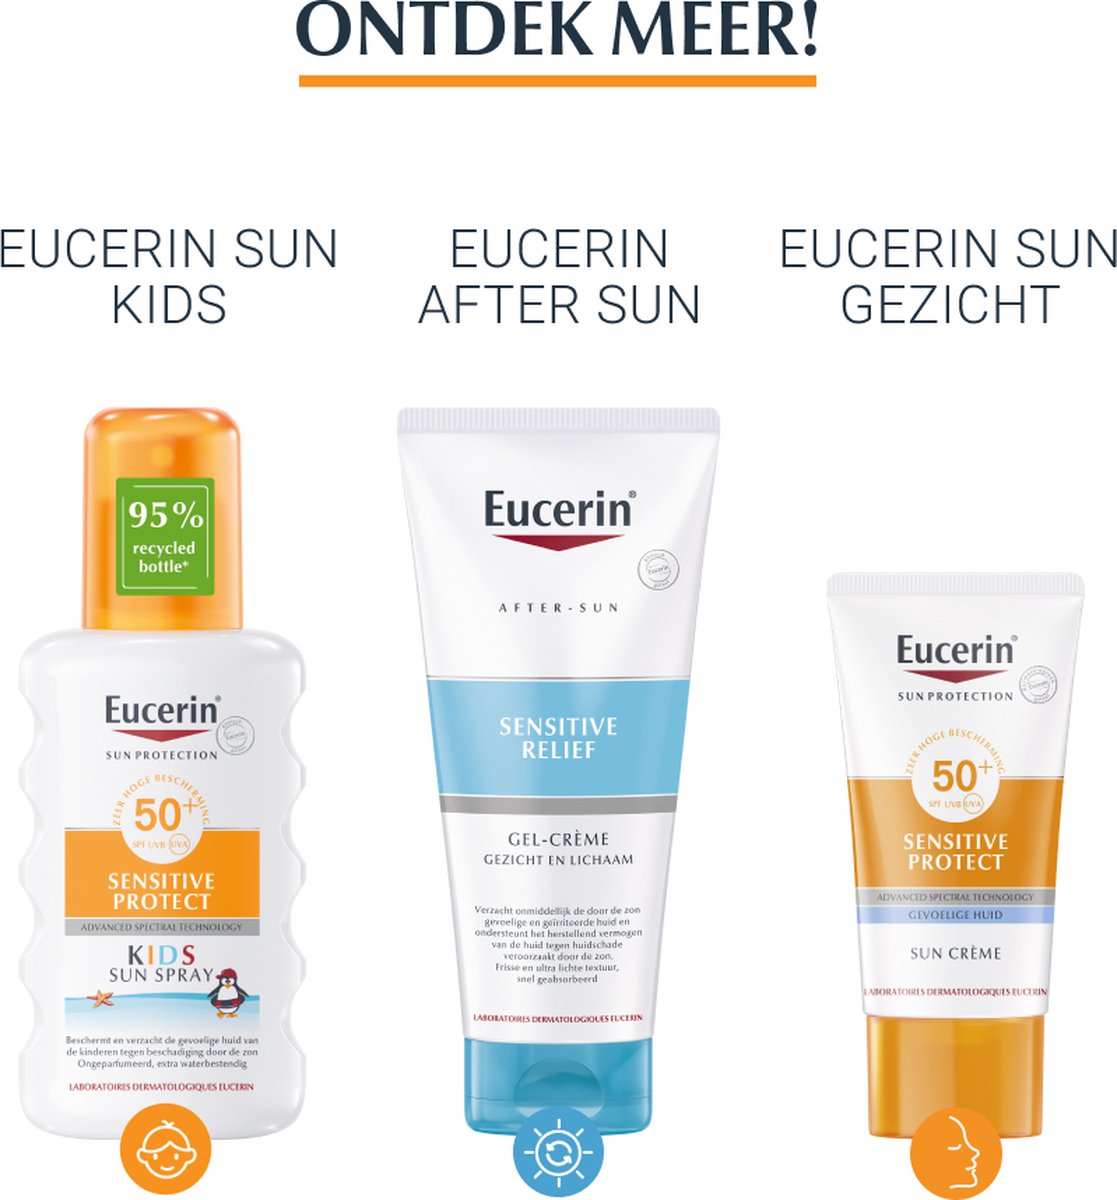 Eucerin Sun Allergy Gel-Crème SPF 50 - Zonnebrand - 150 ml | bol.com